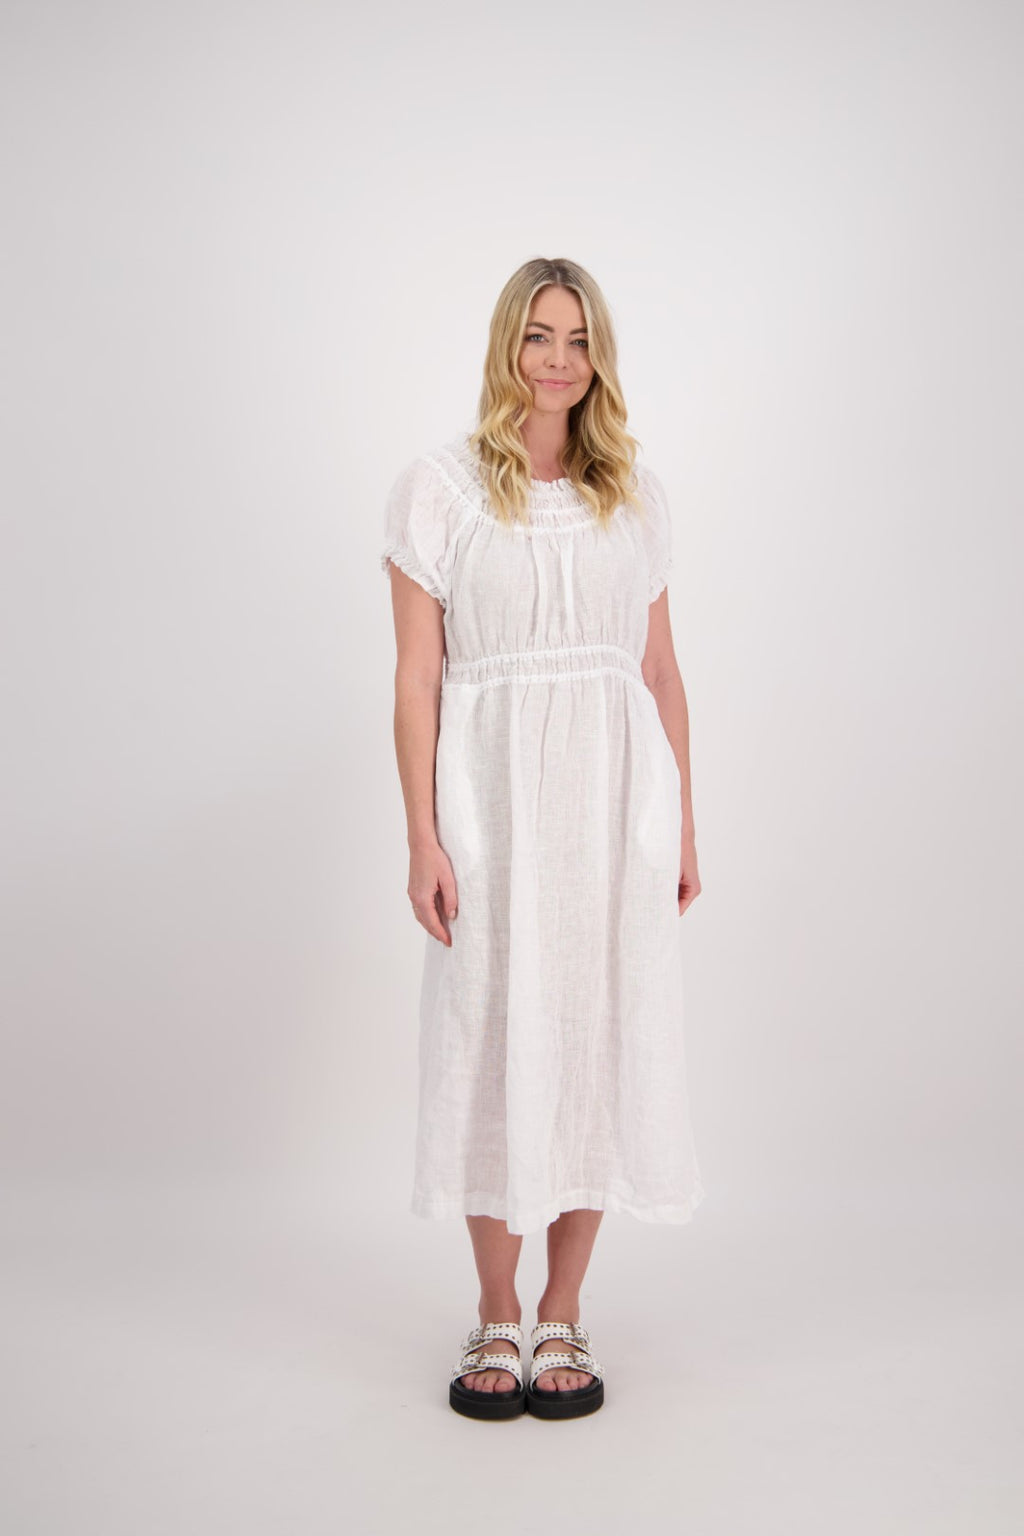 BRIARWOOD POLLYANNA DRESS-WHITE